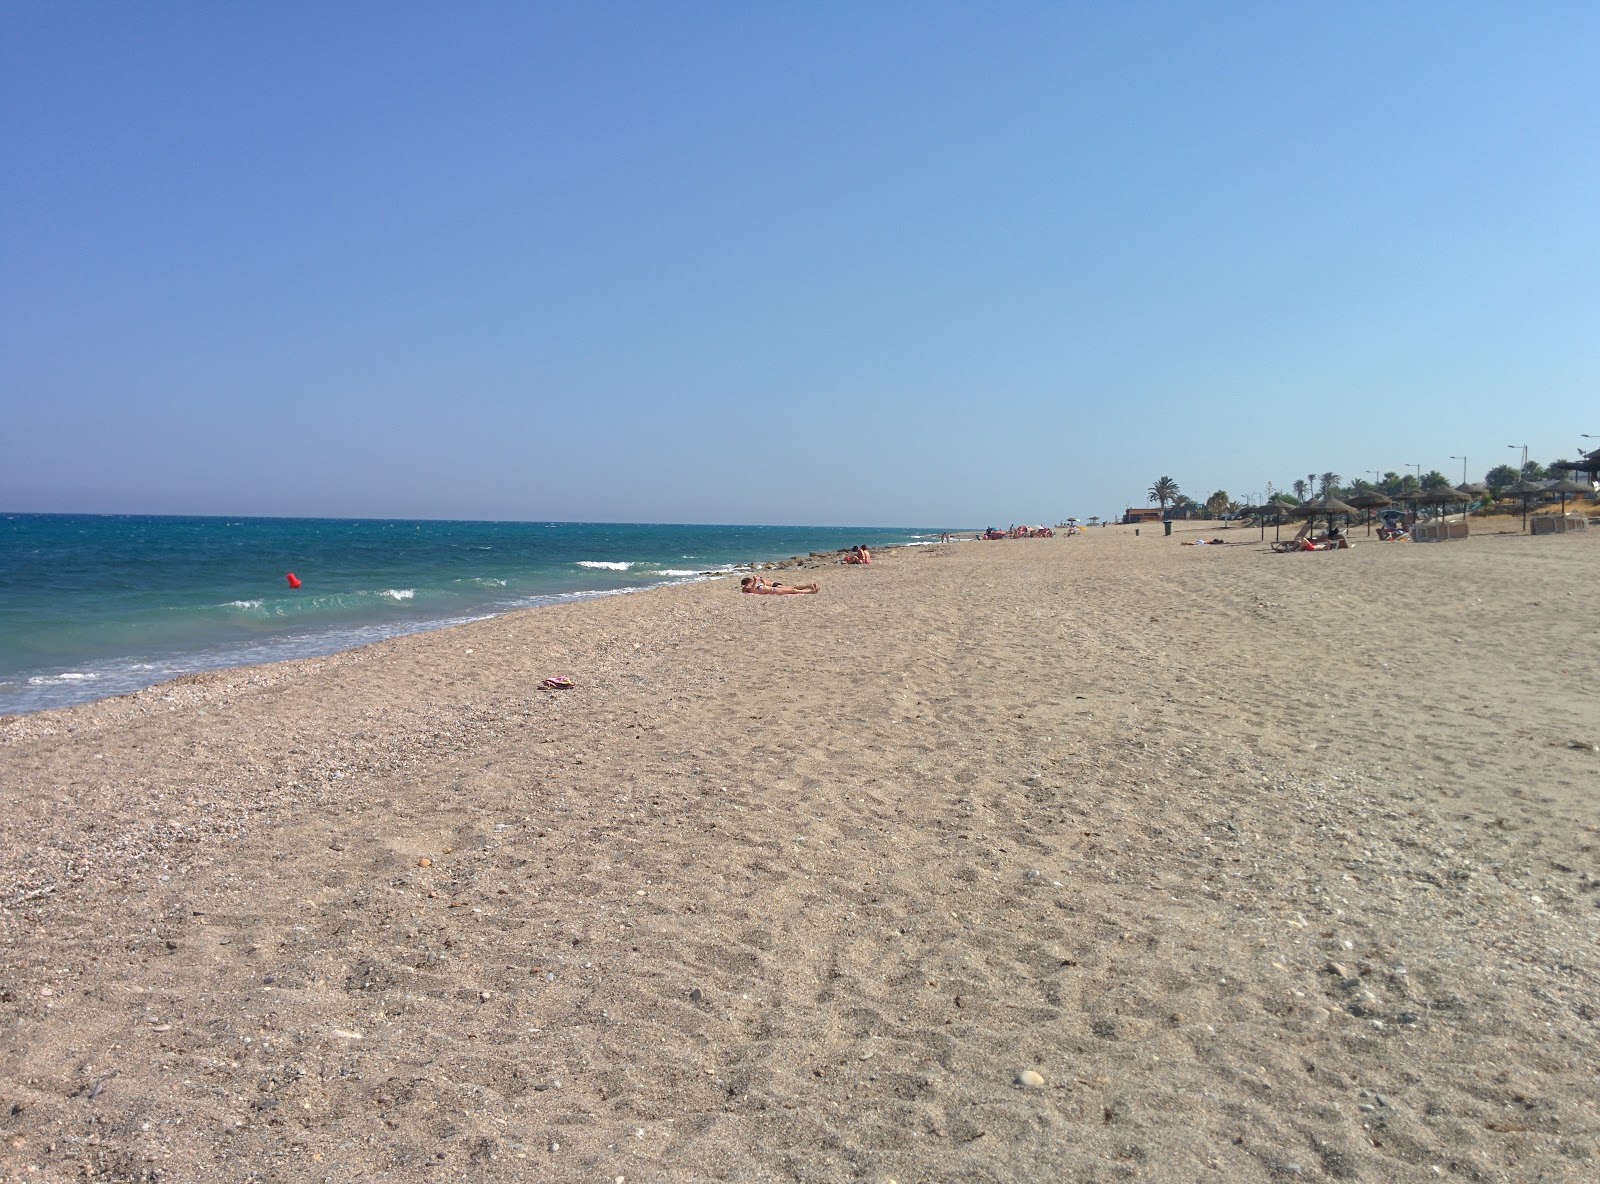 Foto de Playa del descargador com areia de concha brilhante superfície